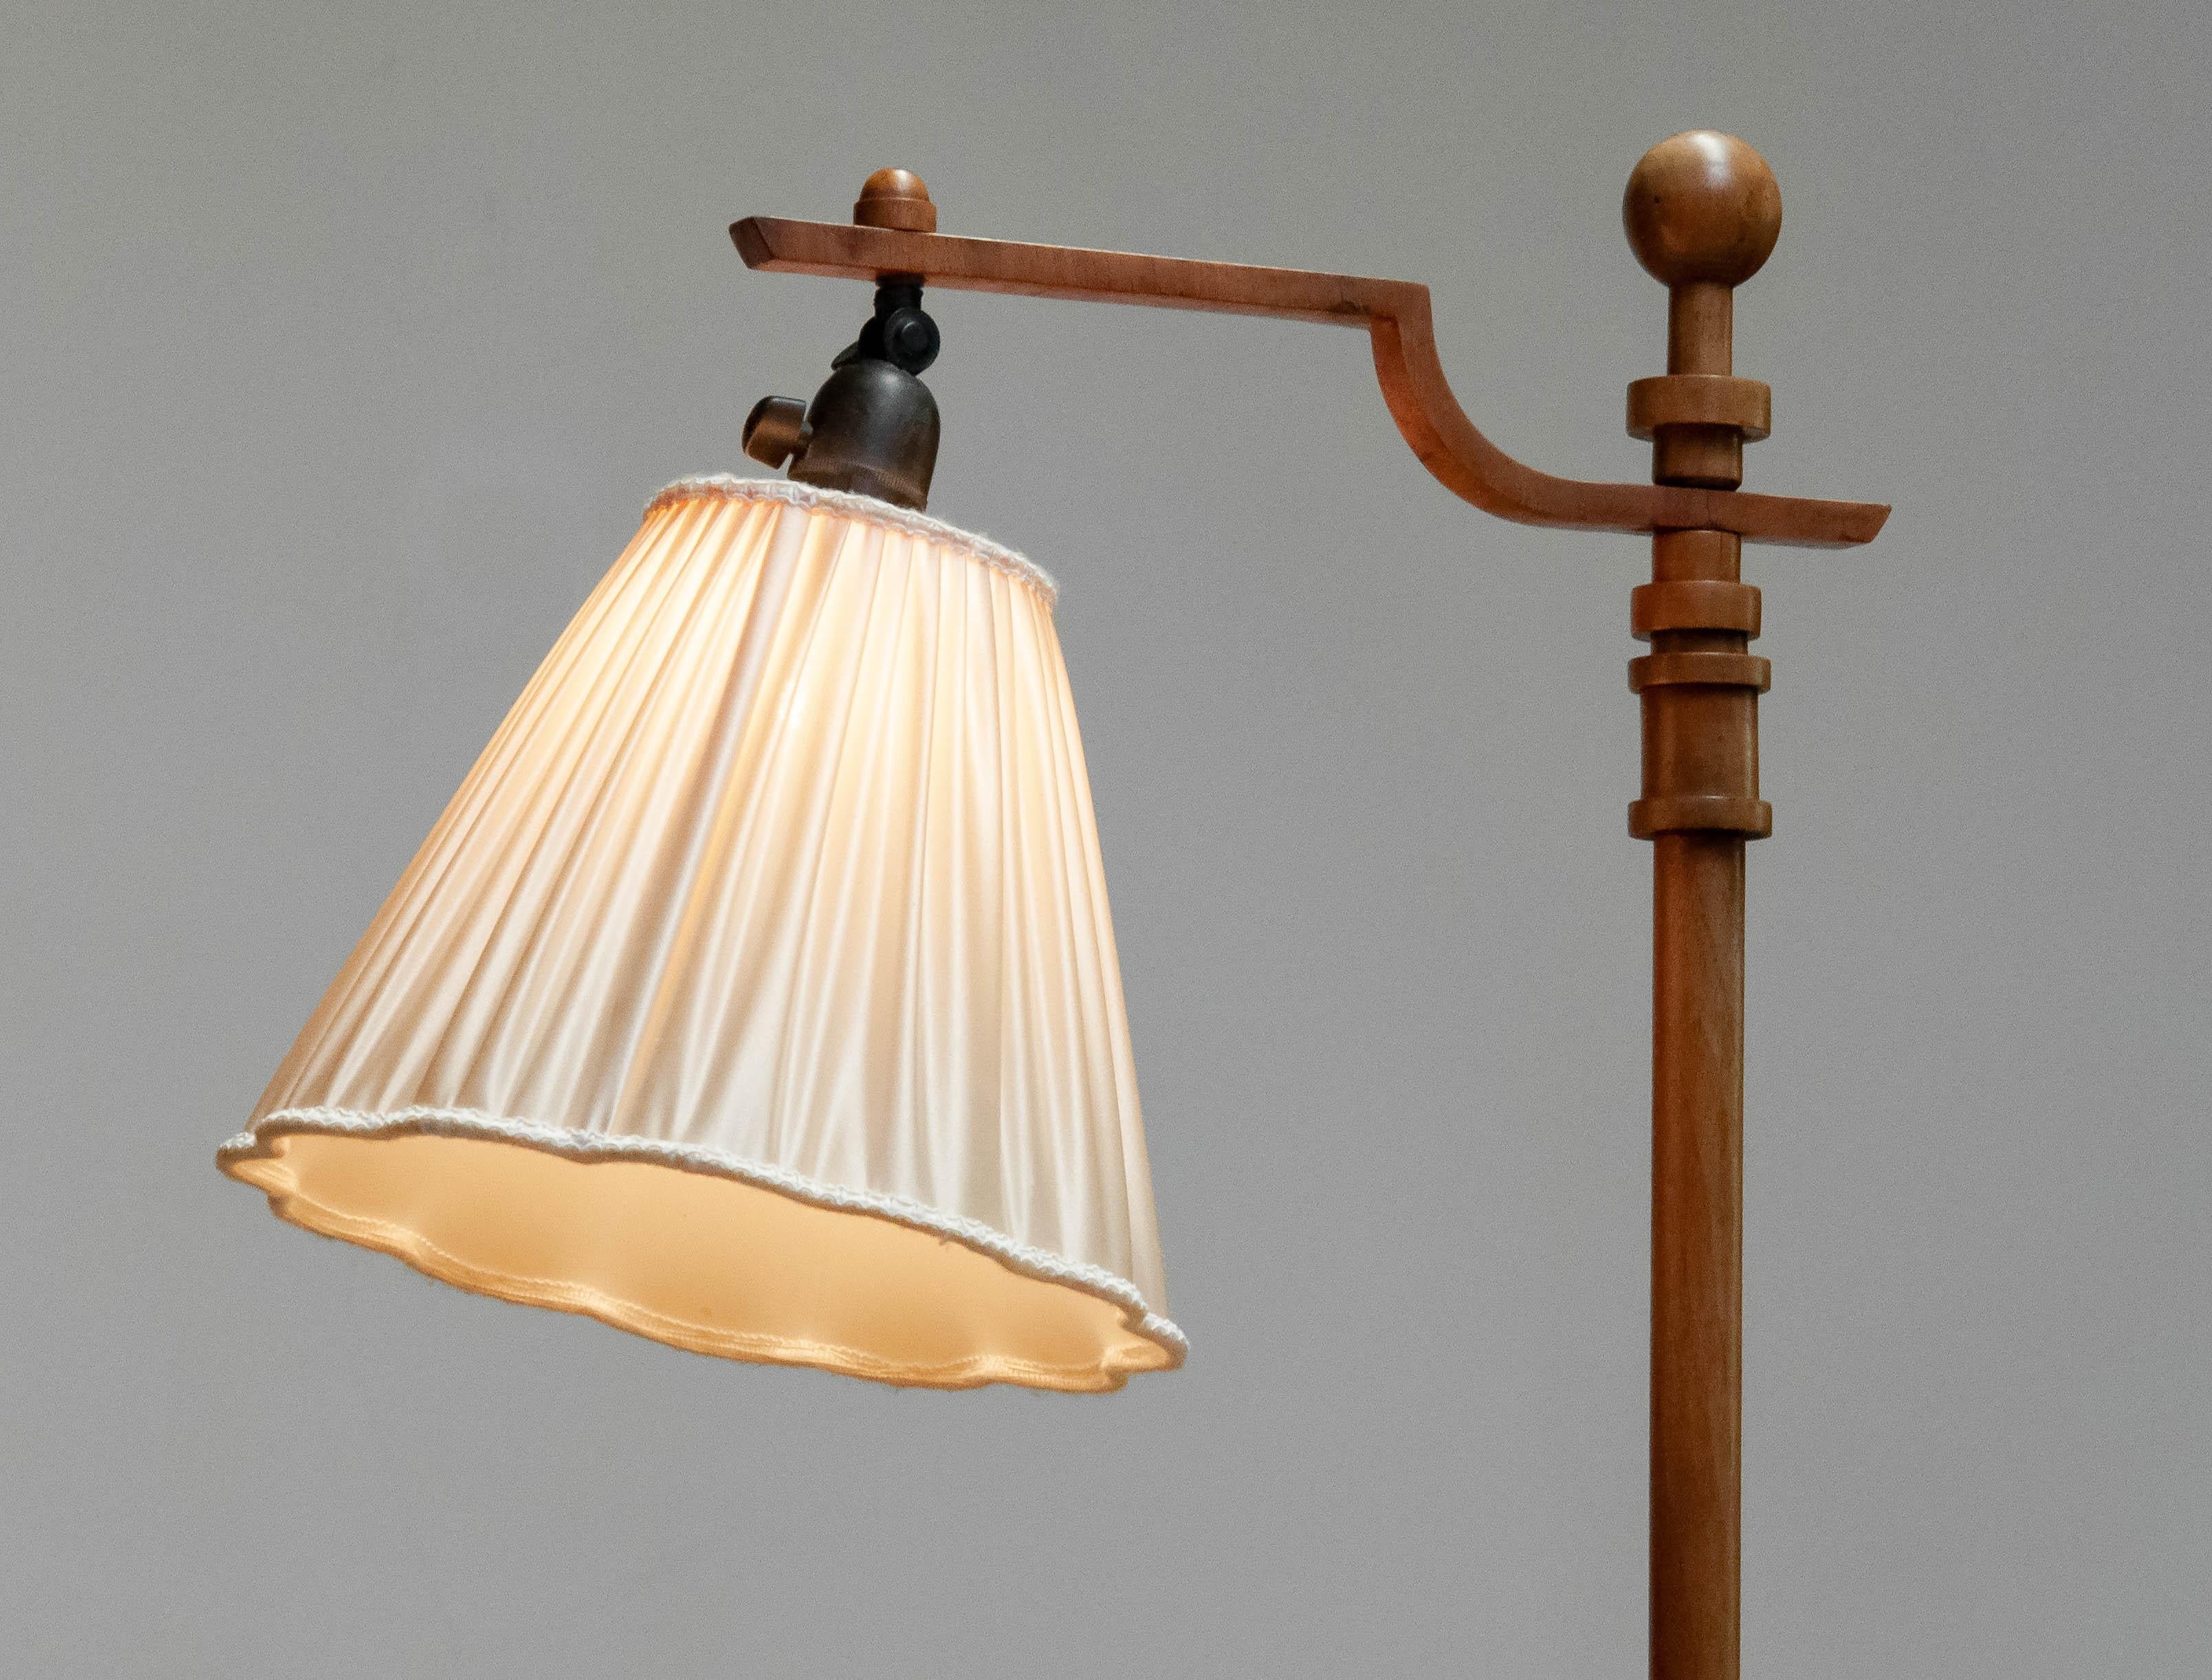 1930 Swedish Designer Art Deco Wooden Floor Lamp In Walnut With Silk Satin Shade For Sale 1